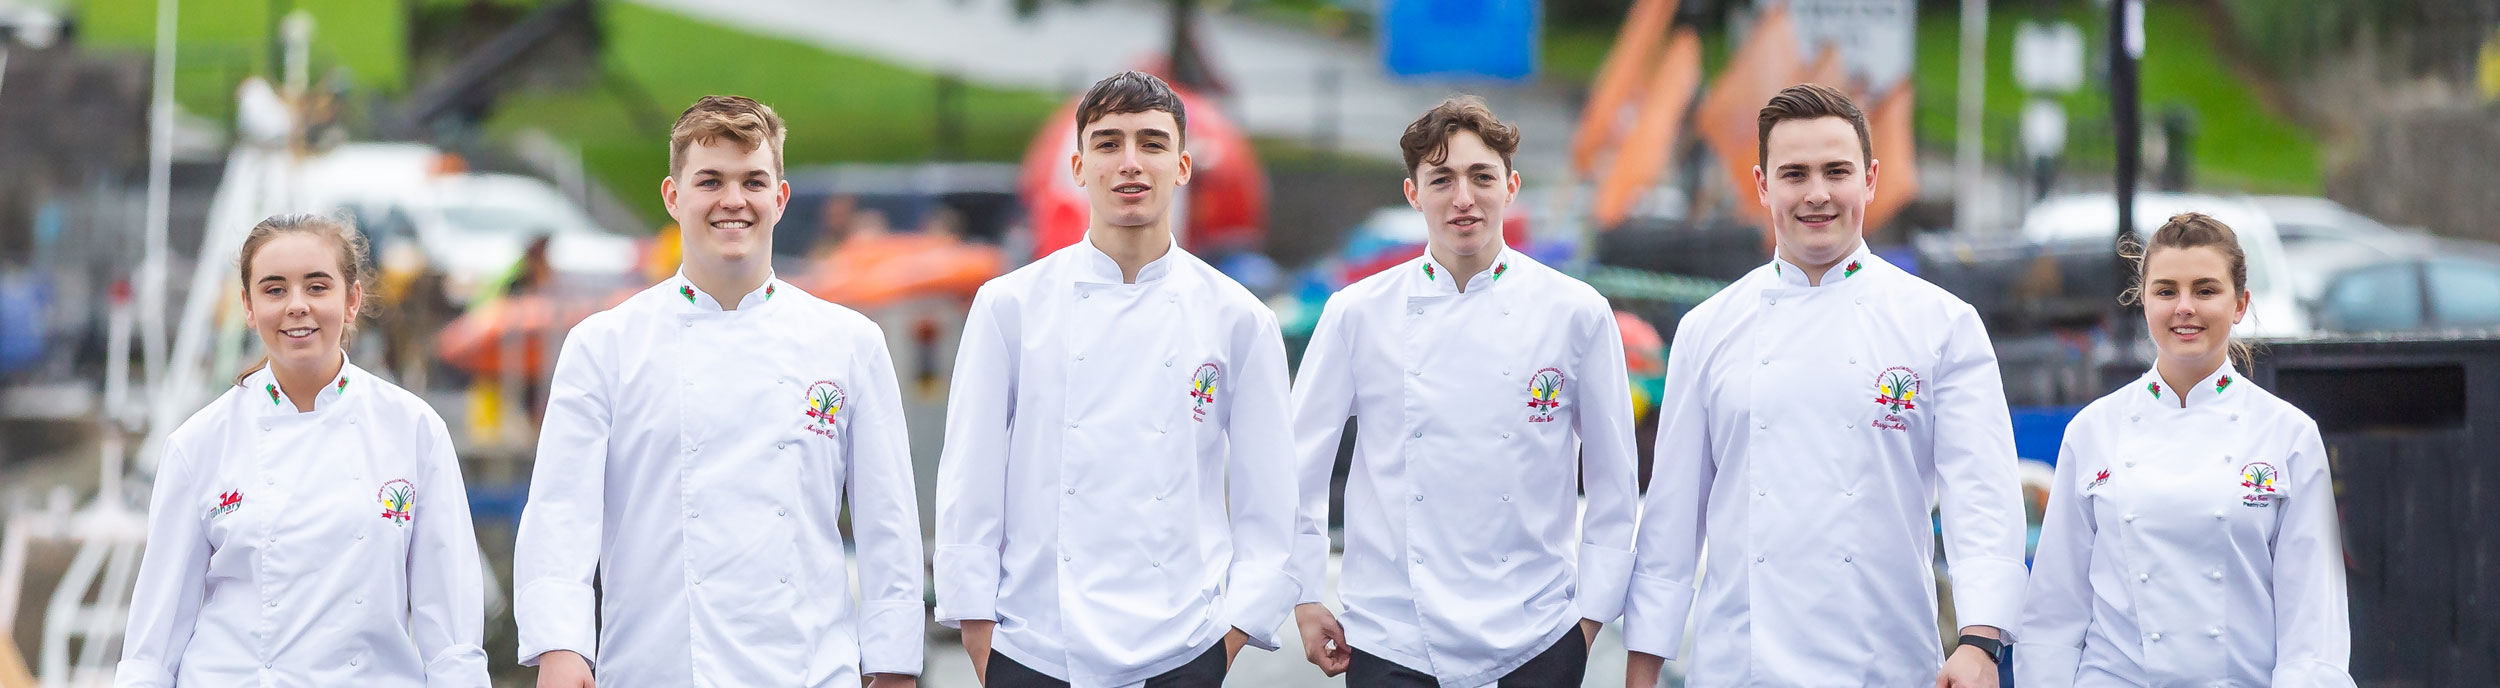 Junior Culinary Team of Wales